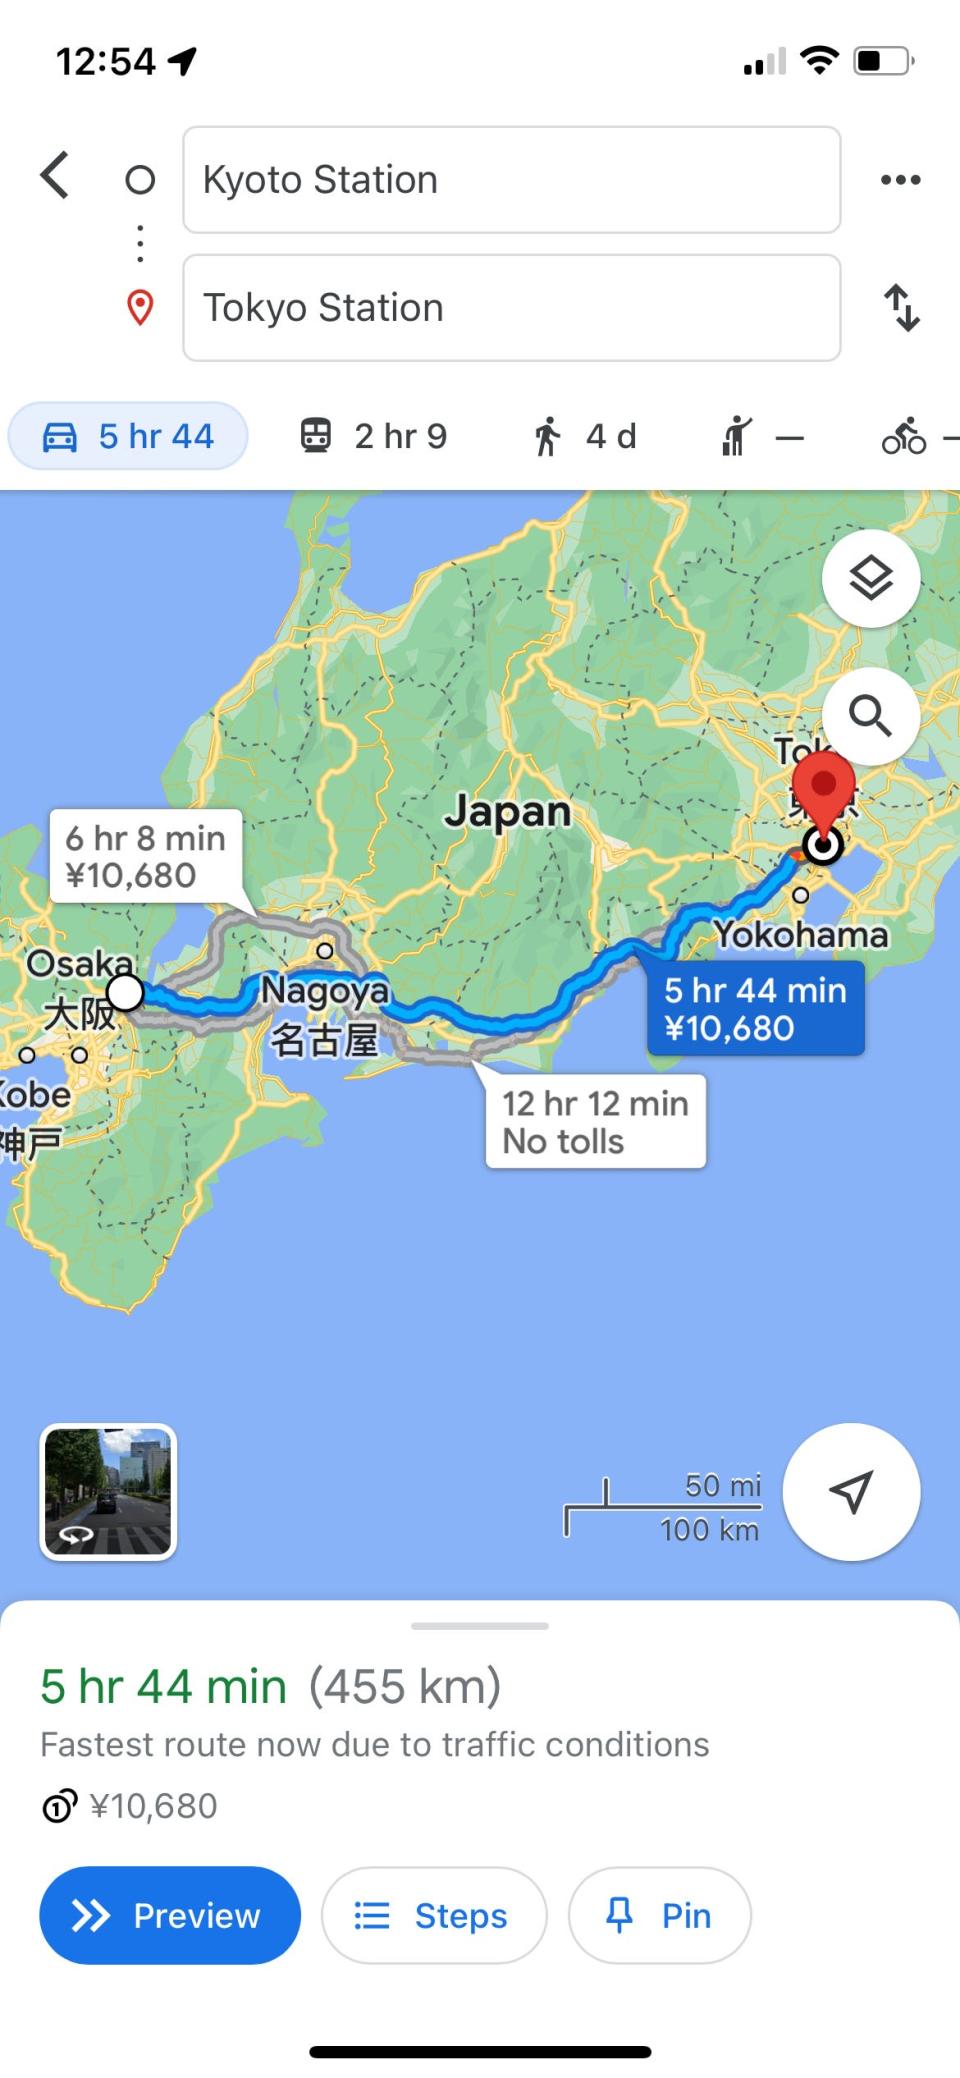 A screenshot of the drive between Kyoto and Tokyo.